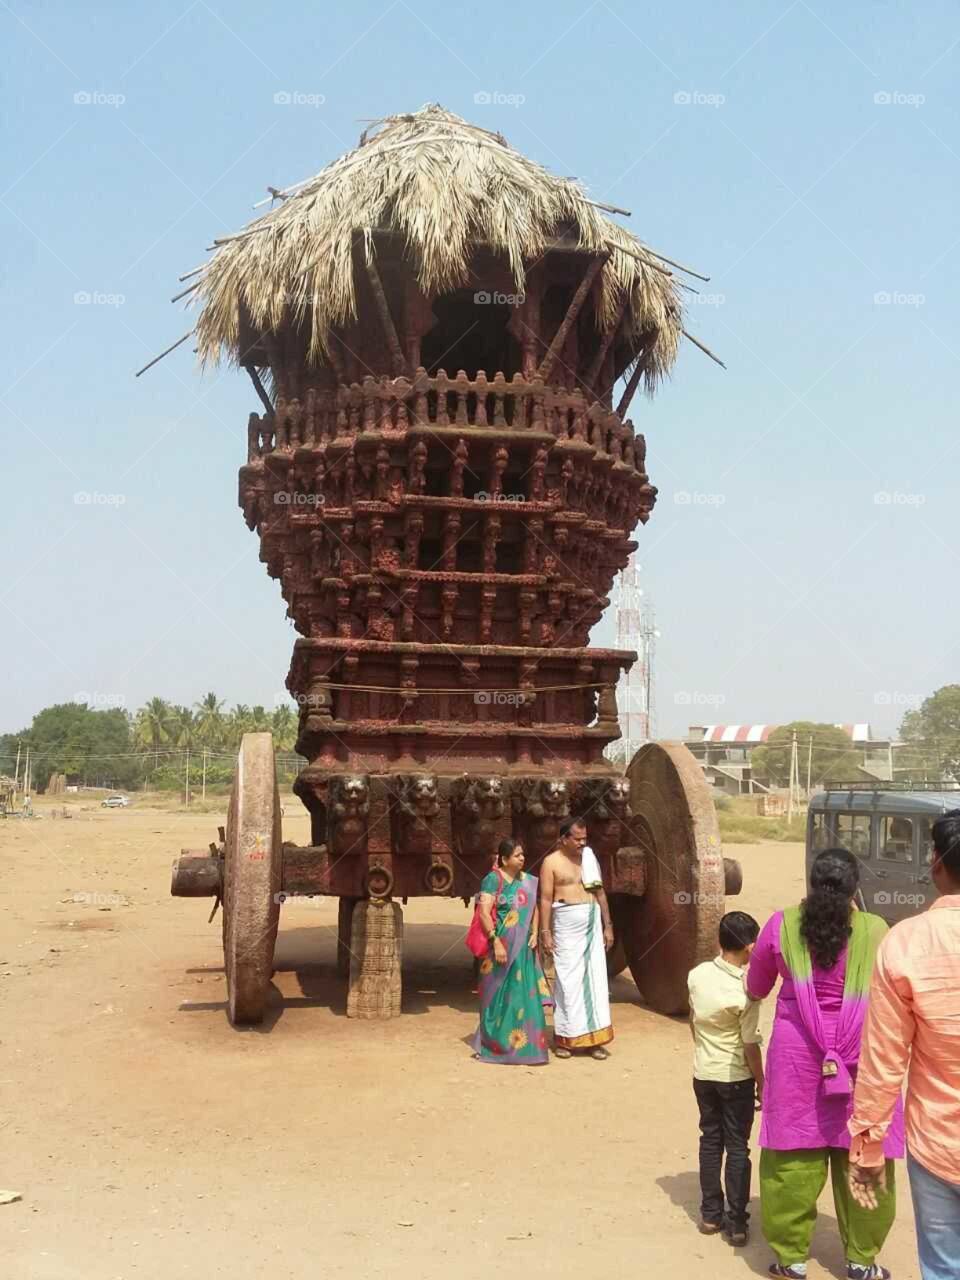 The Stone Chariot
Hampi, Karnataka, India.